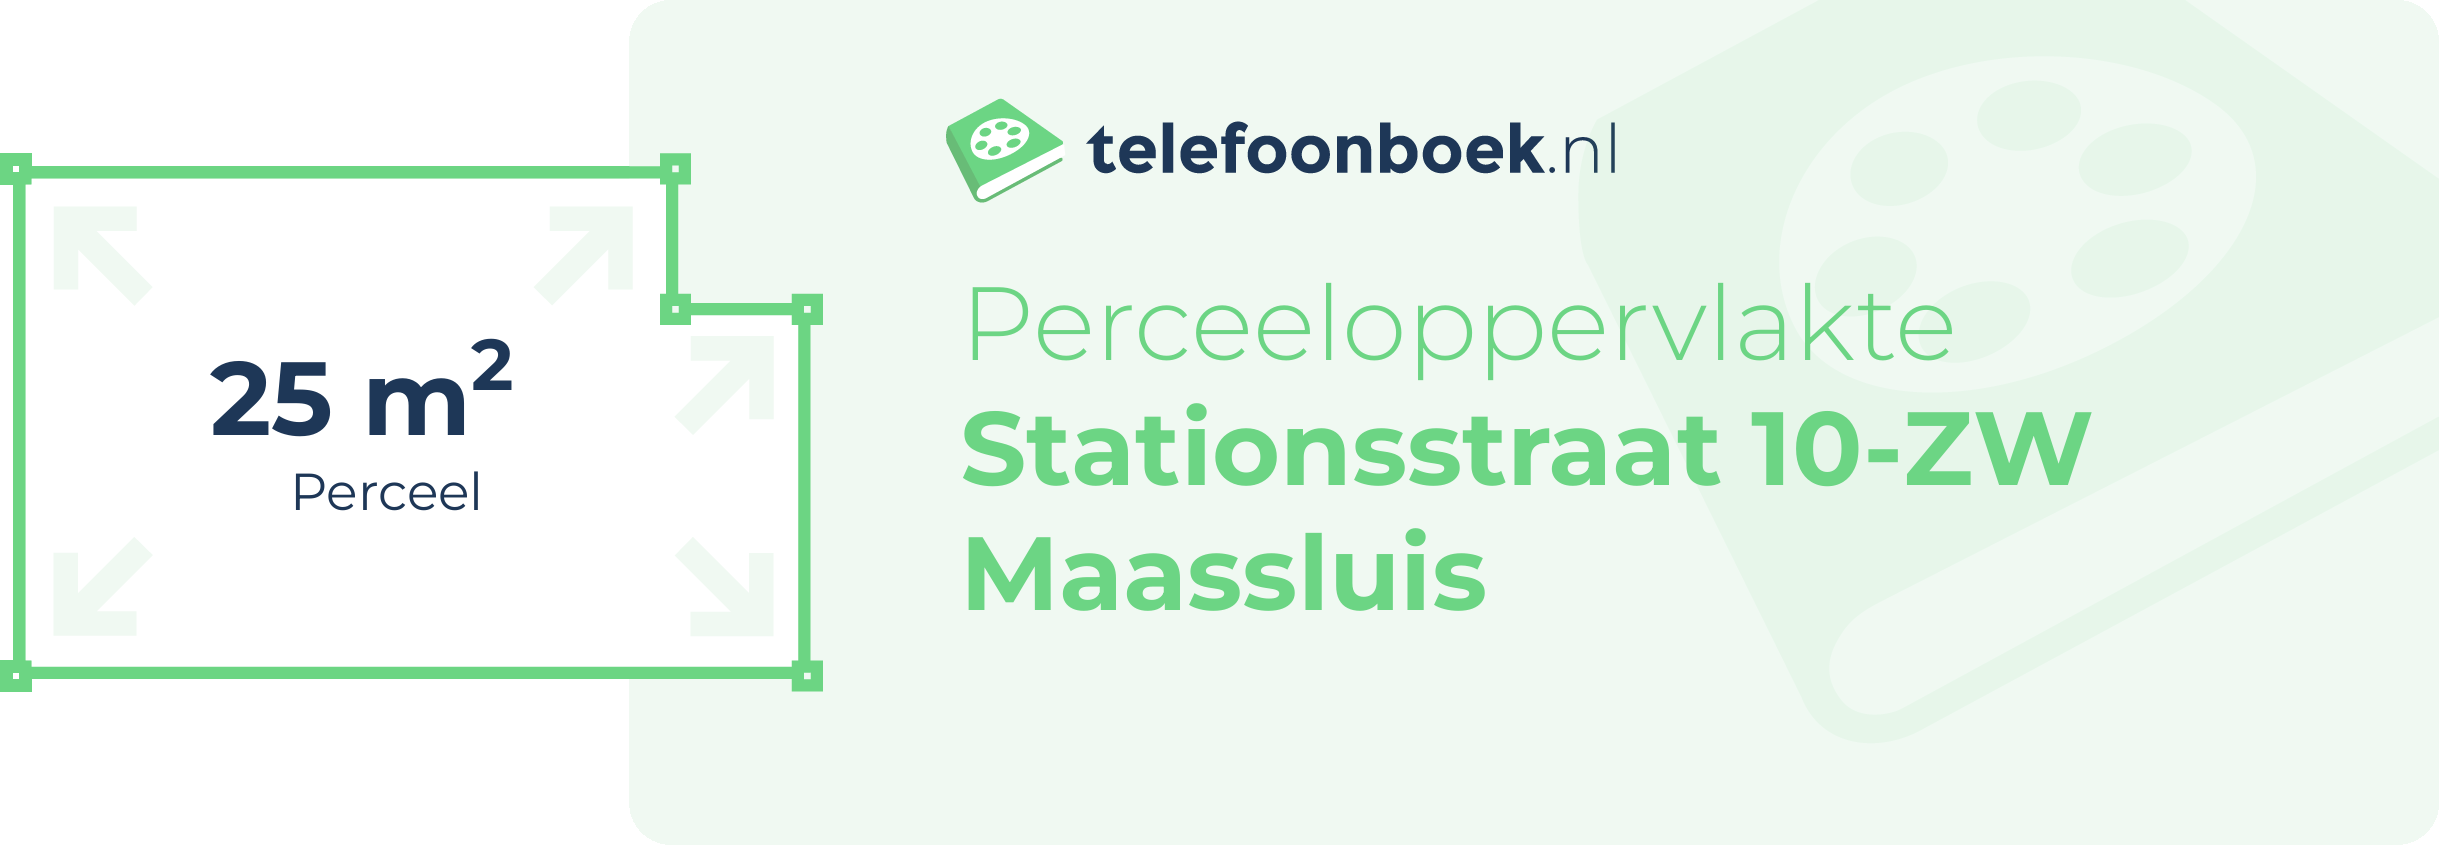 Perceeloppervlakte Stationsstraat 10-ZW Maassluis